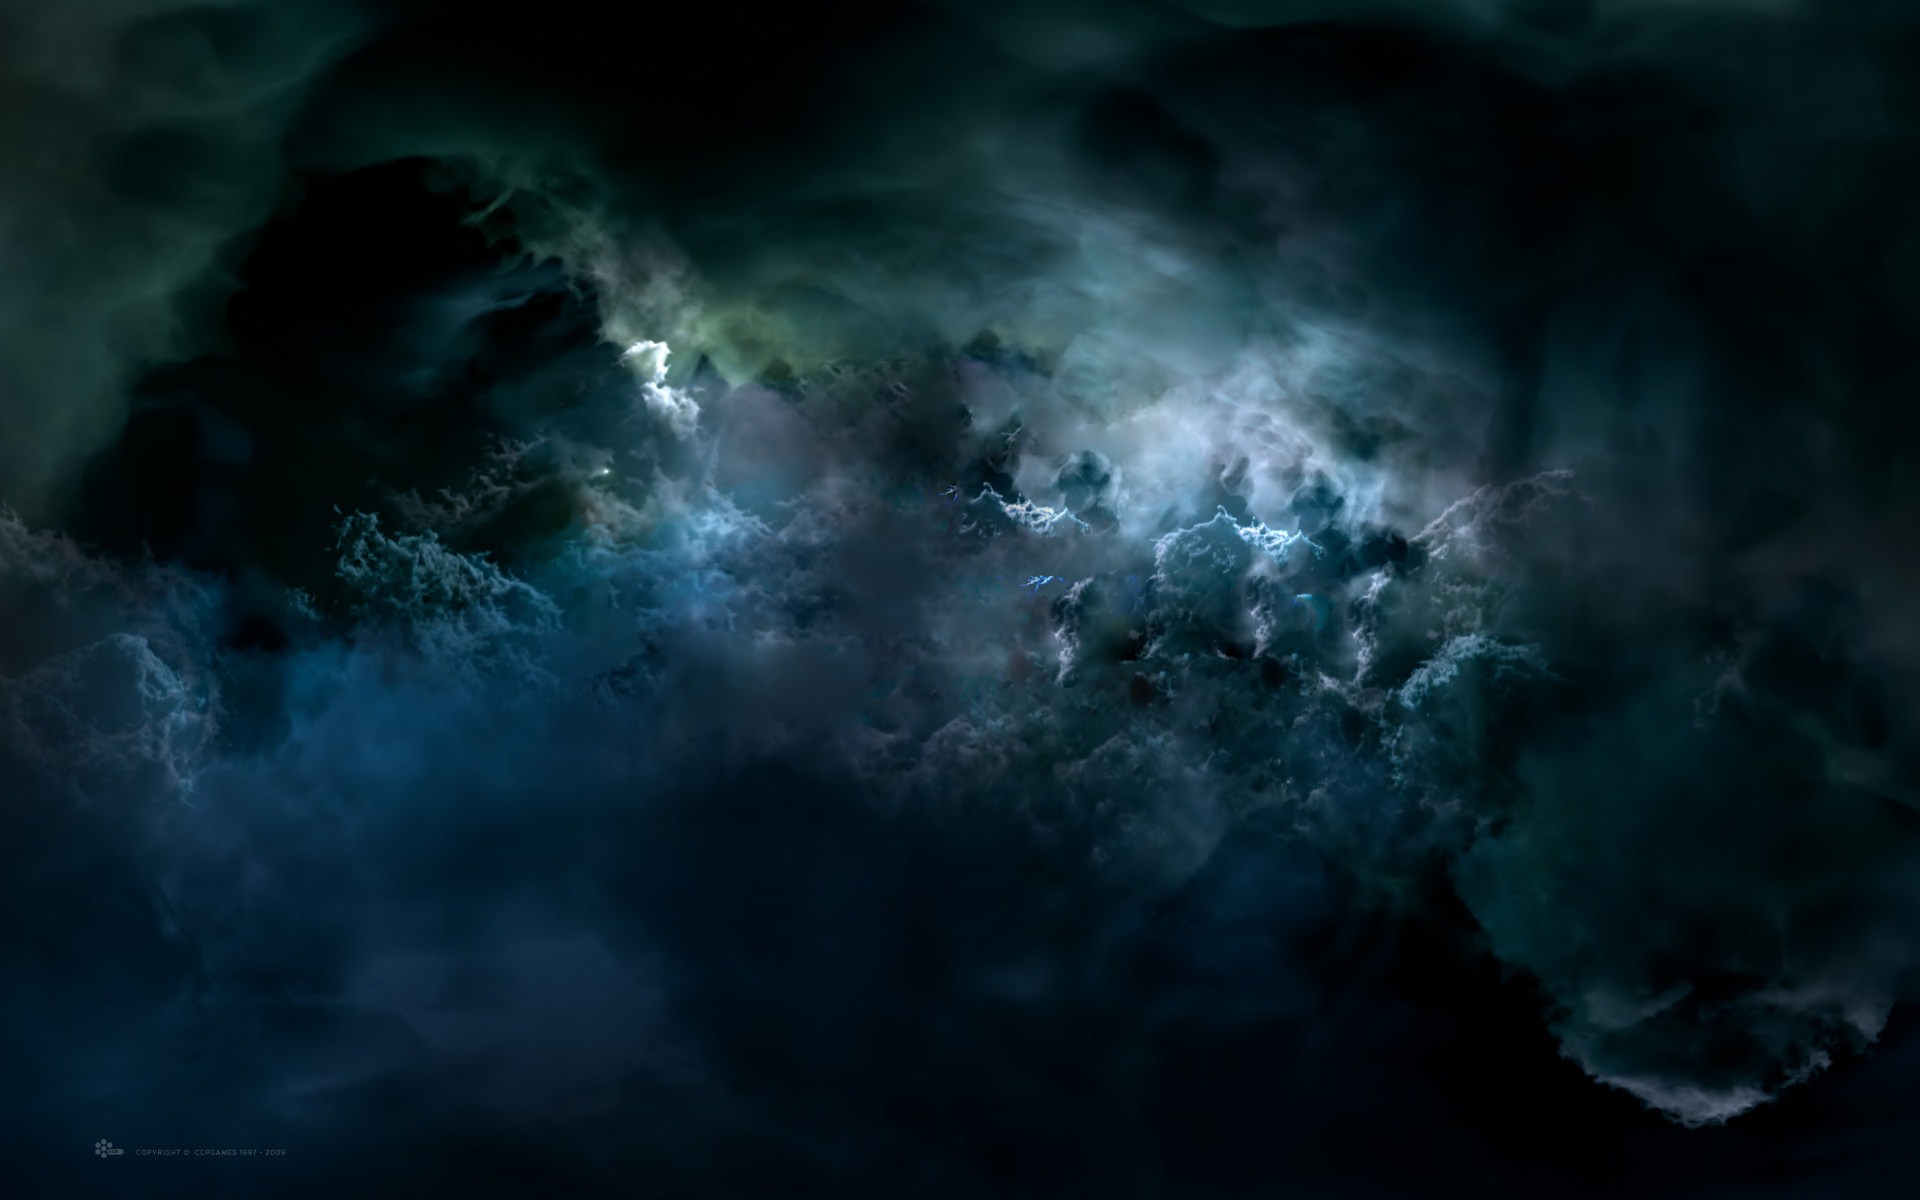 Scientific planet nebula cloud hd black wallpaper wallpaper background